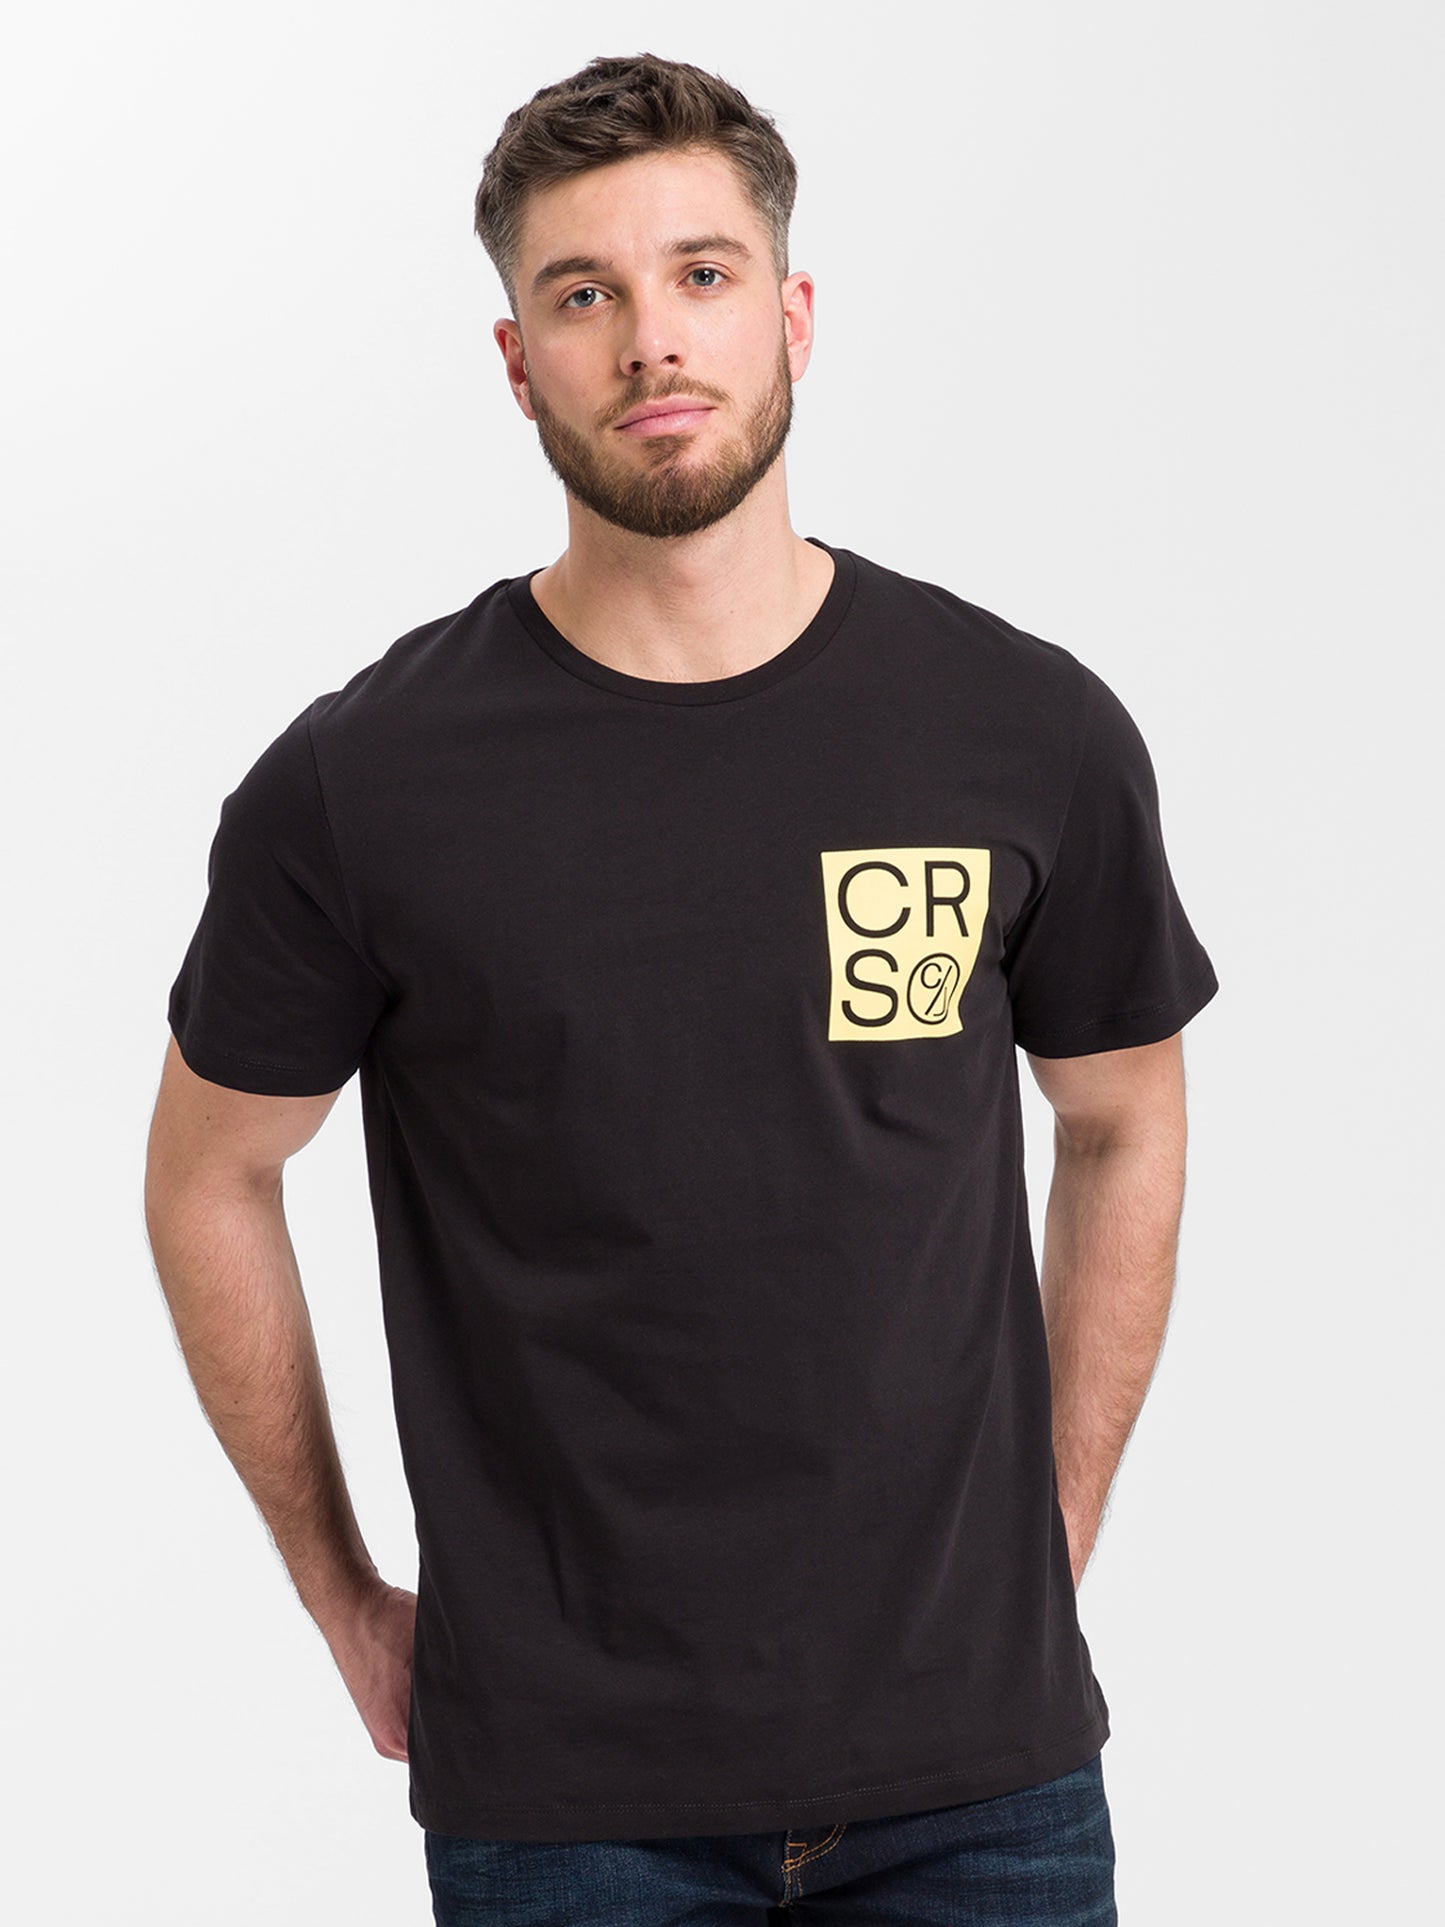 Men's regular T-shirt with logo print, black